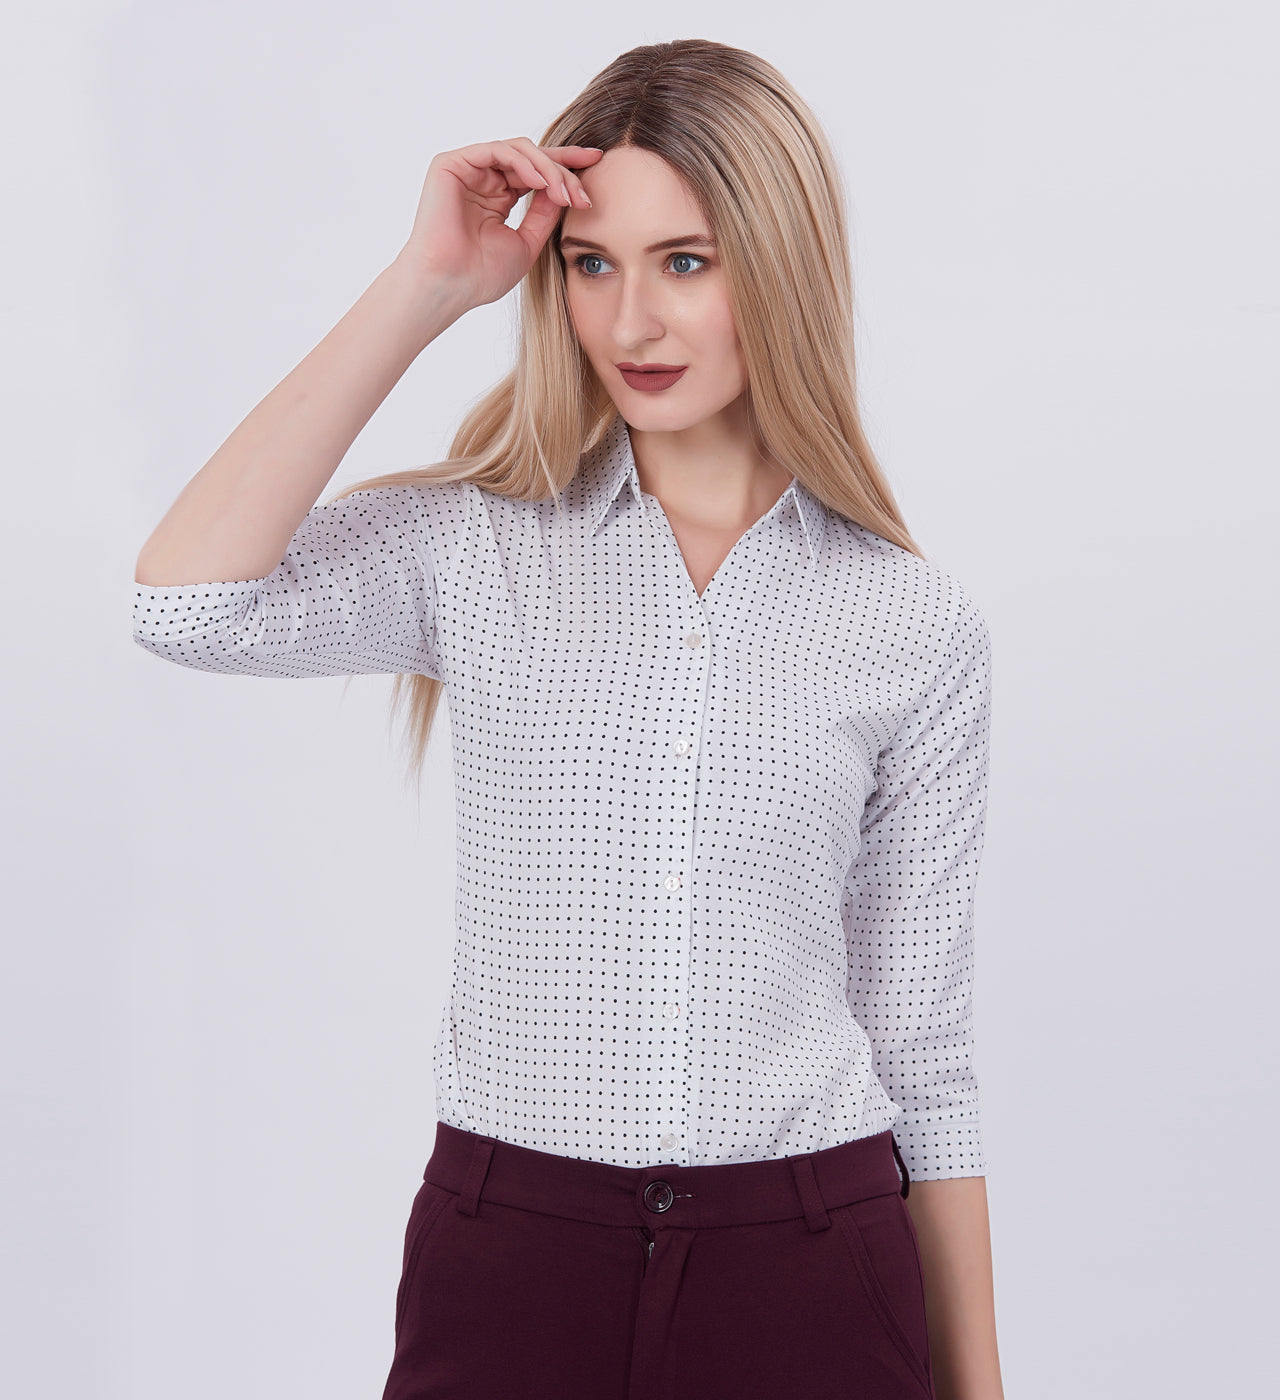 Blum Denim Women's (1003) White Formal Shirt with Shirt Collar, 3/4 Sleeves, in Inbox Fabric